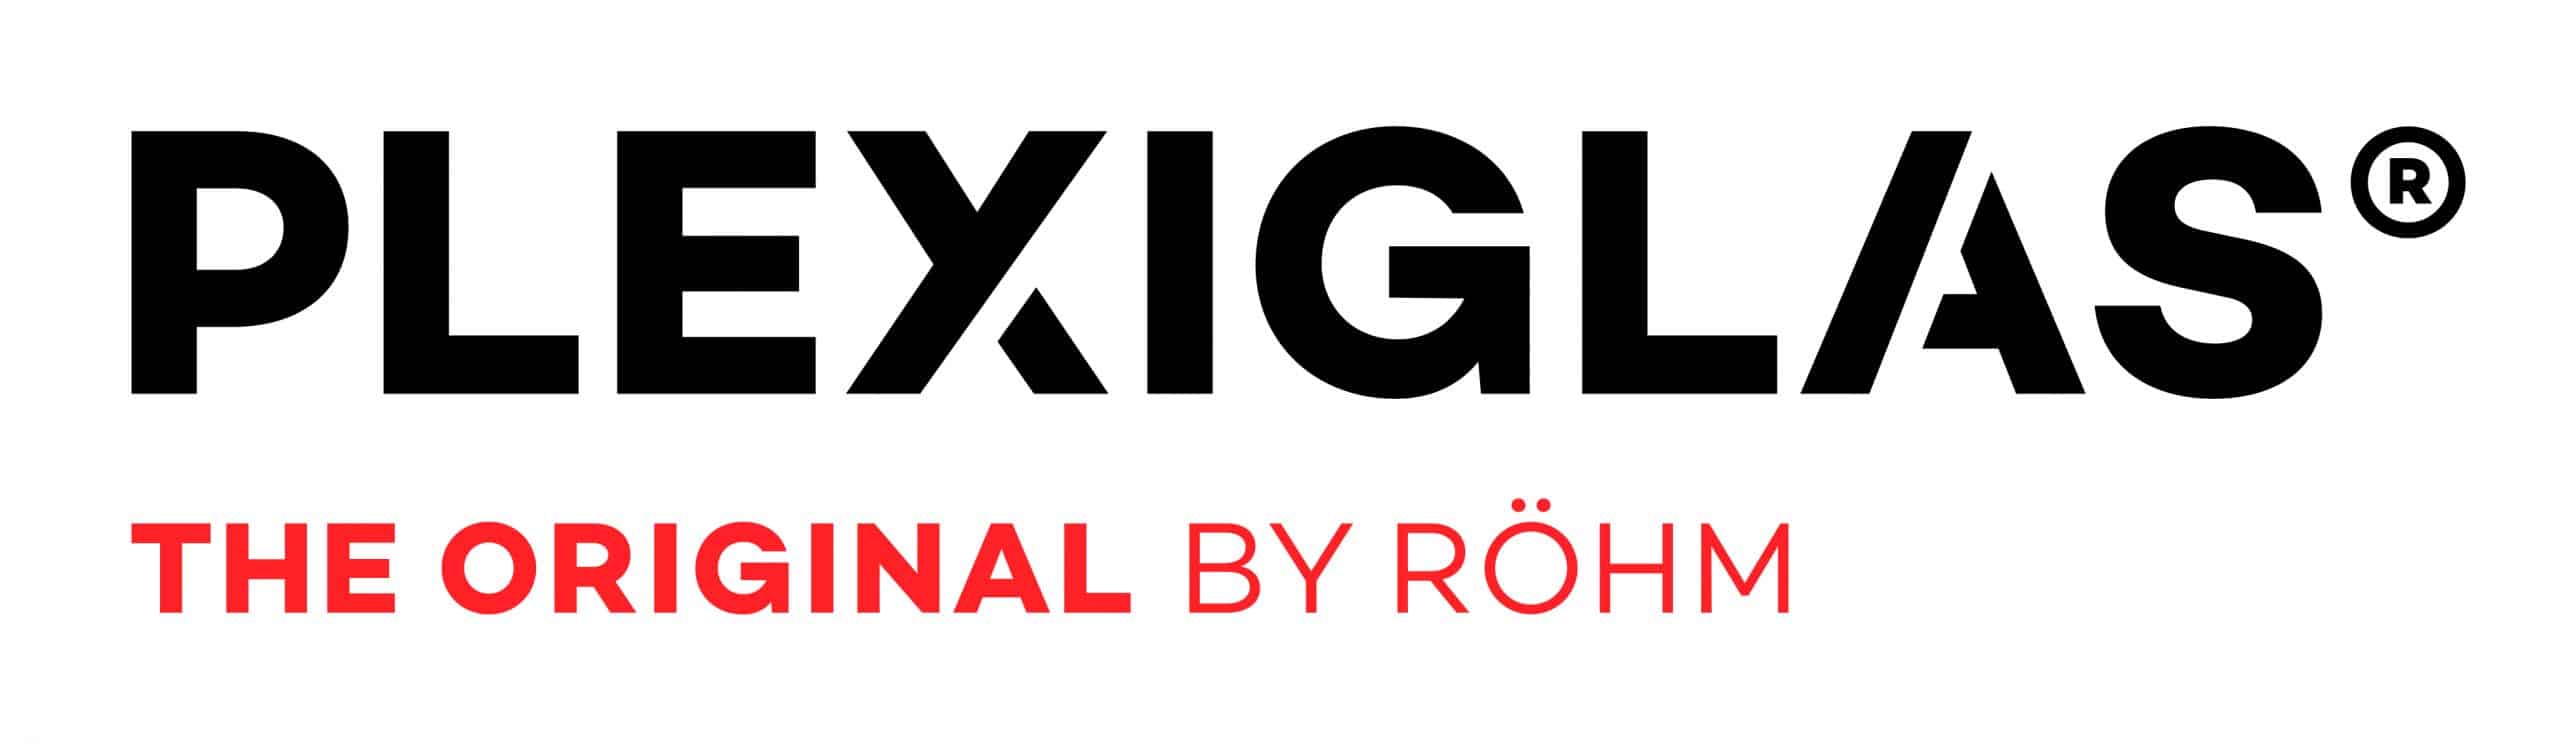 plexiglas_logo-tagline_bk-4c